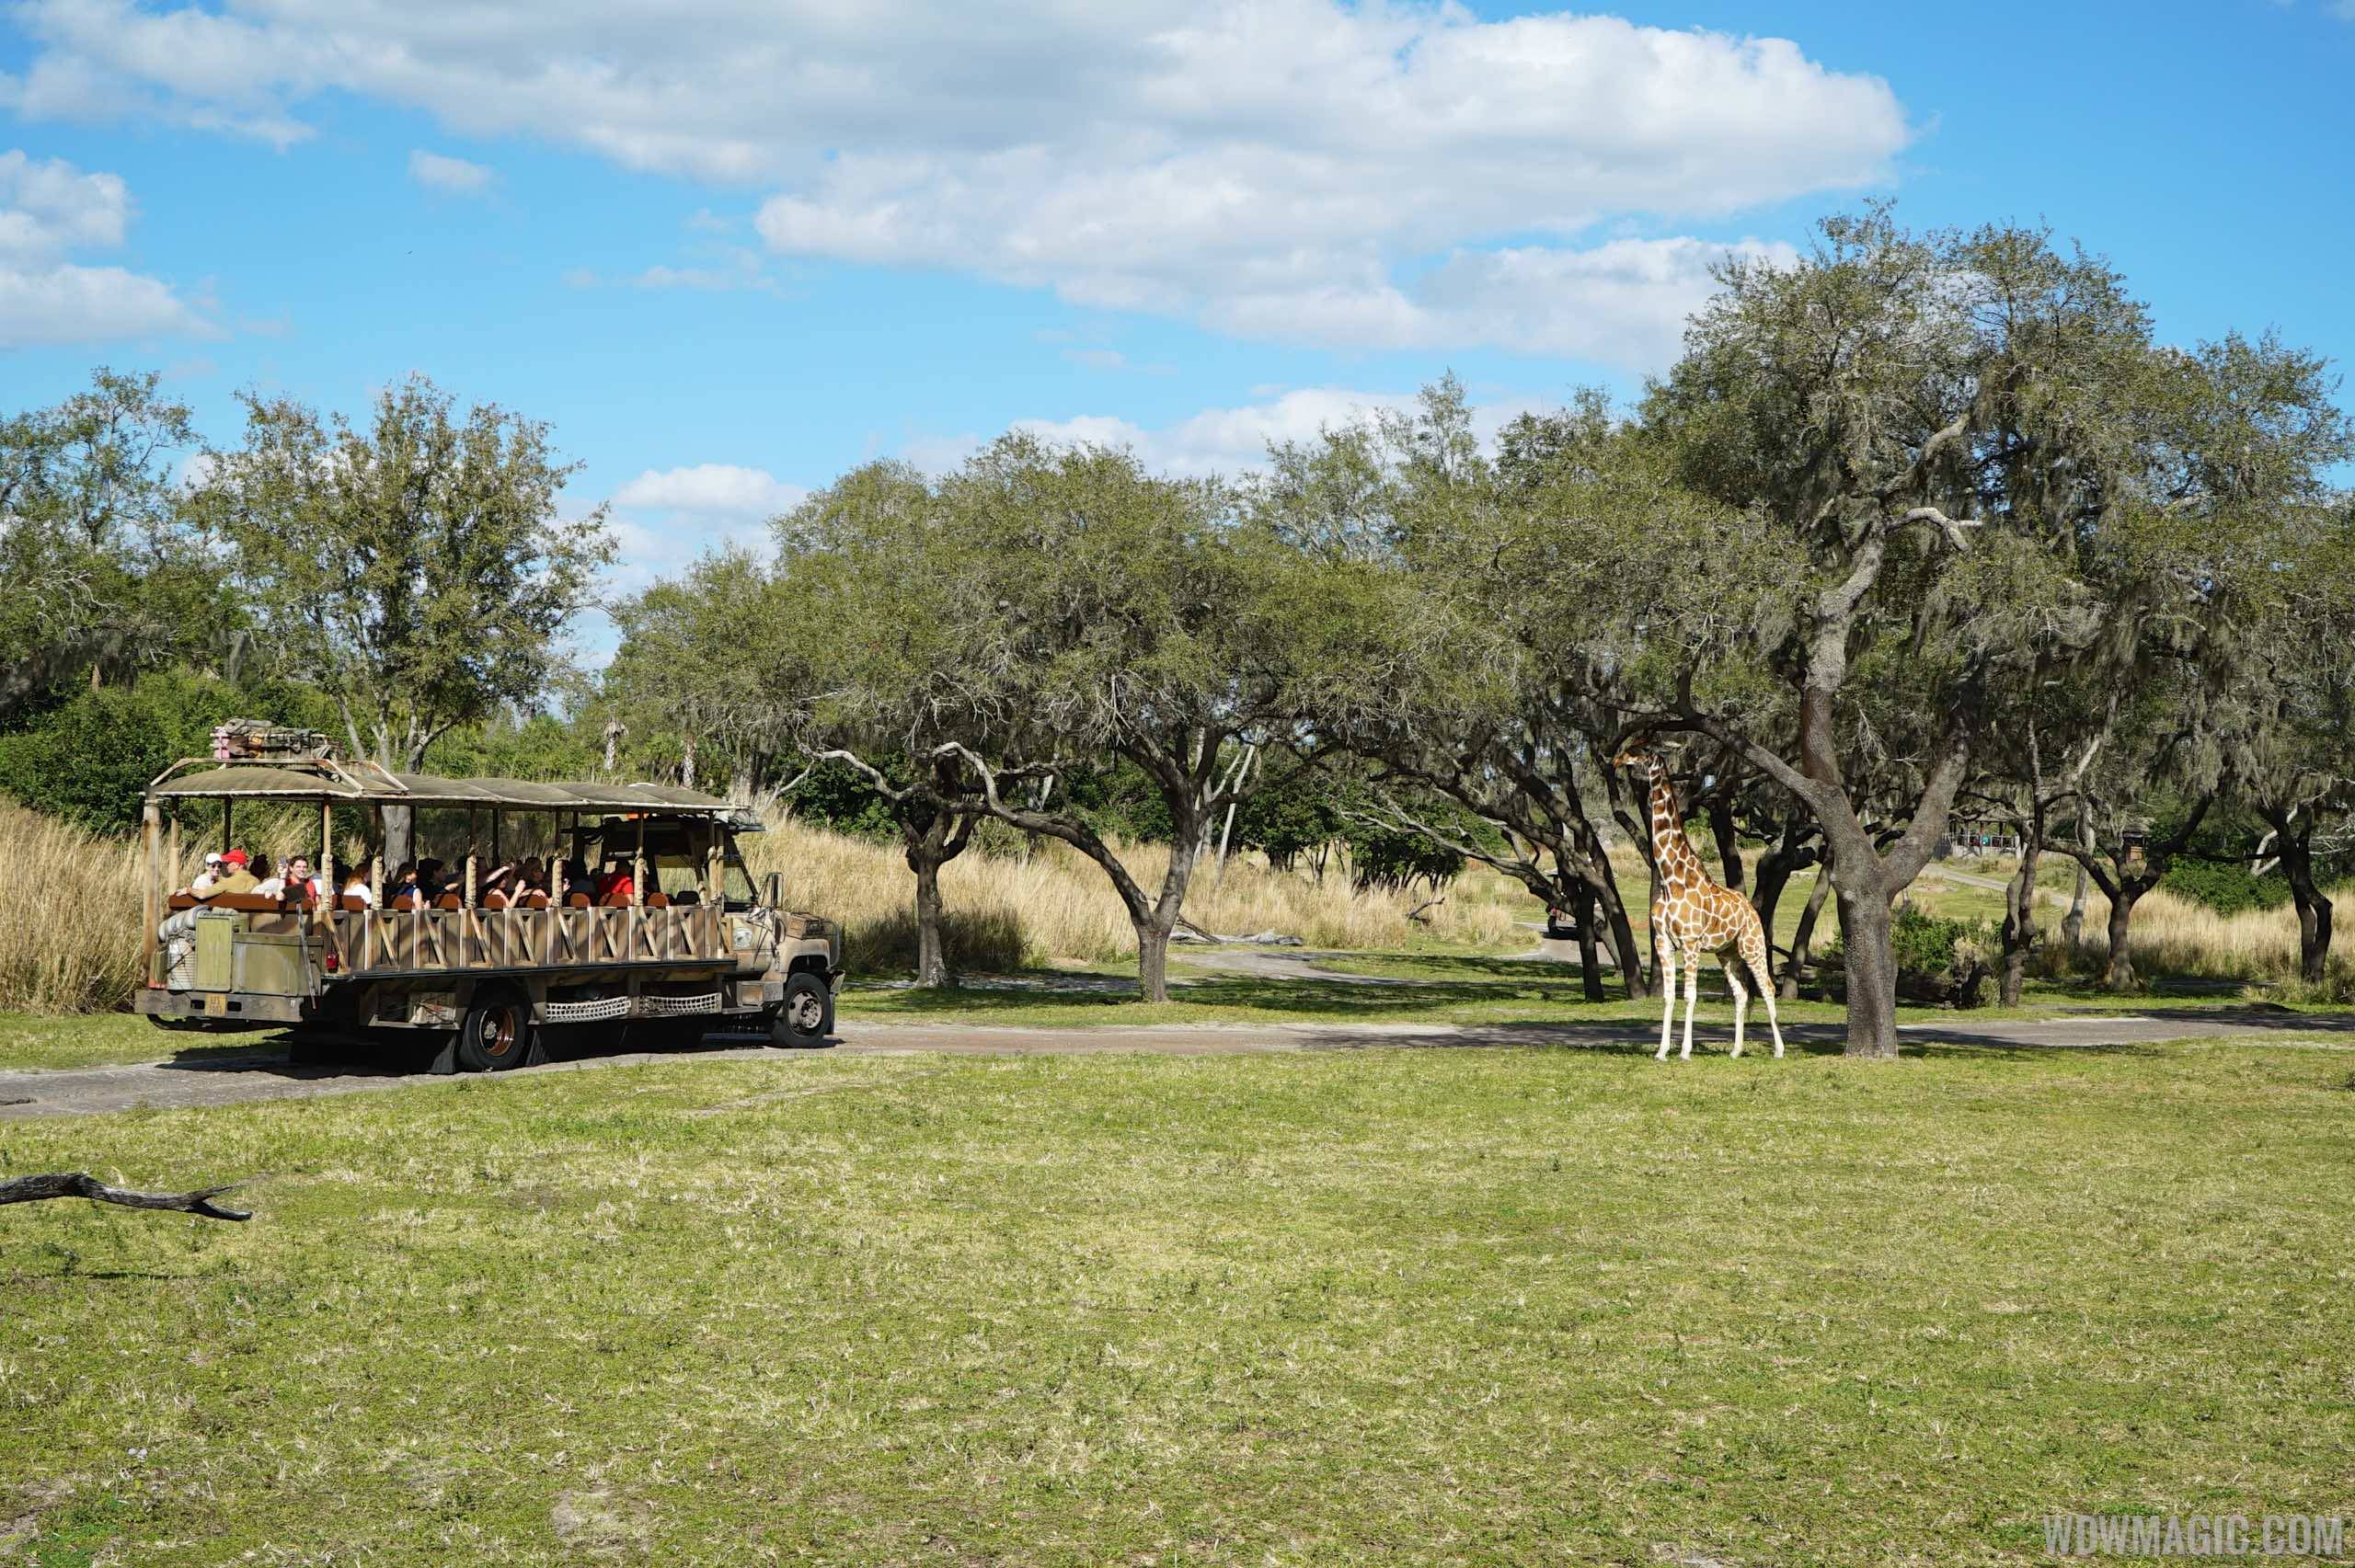 Travel through an African Savannah at Disney's Animal Kingdom